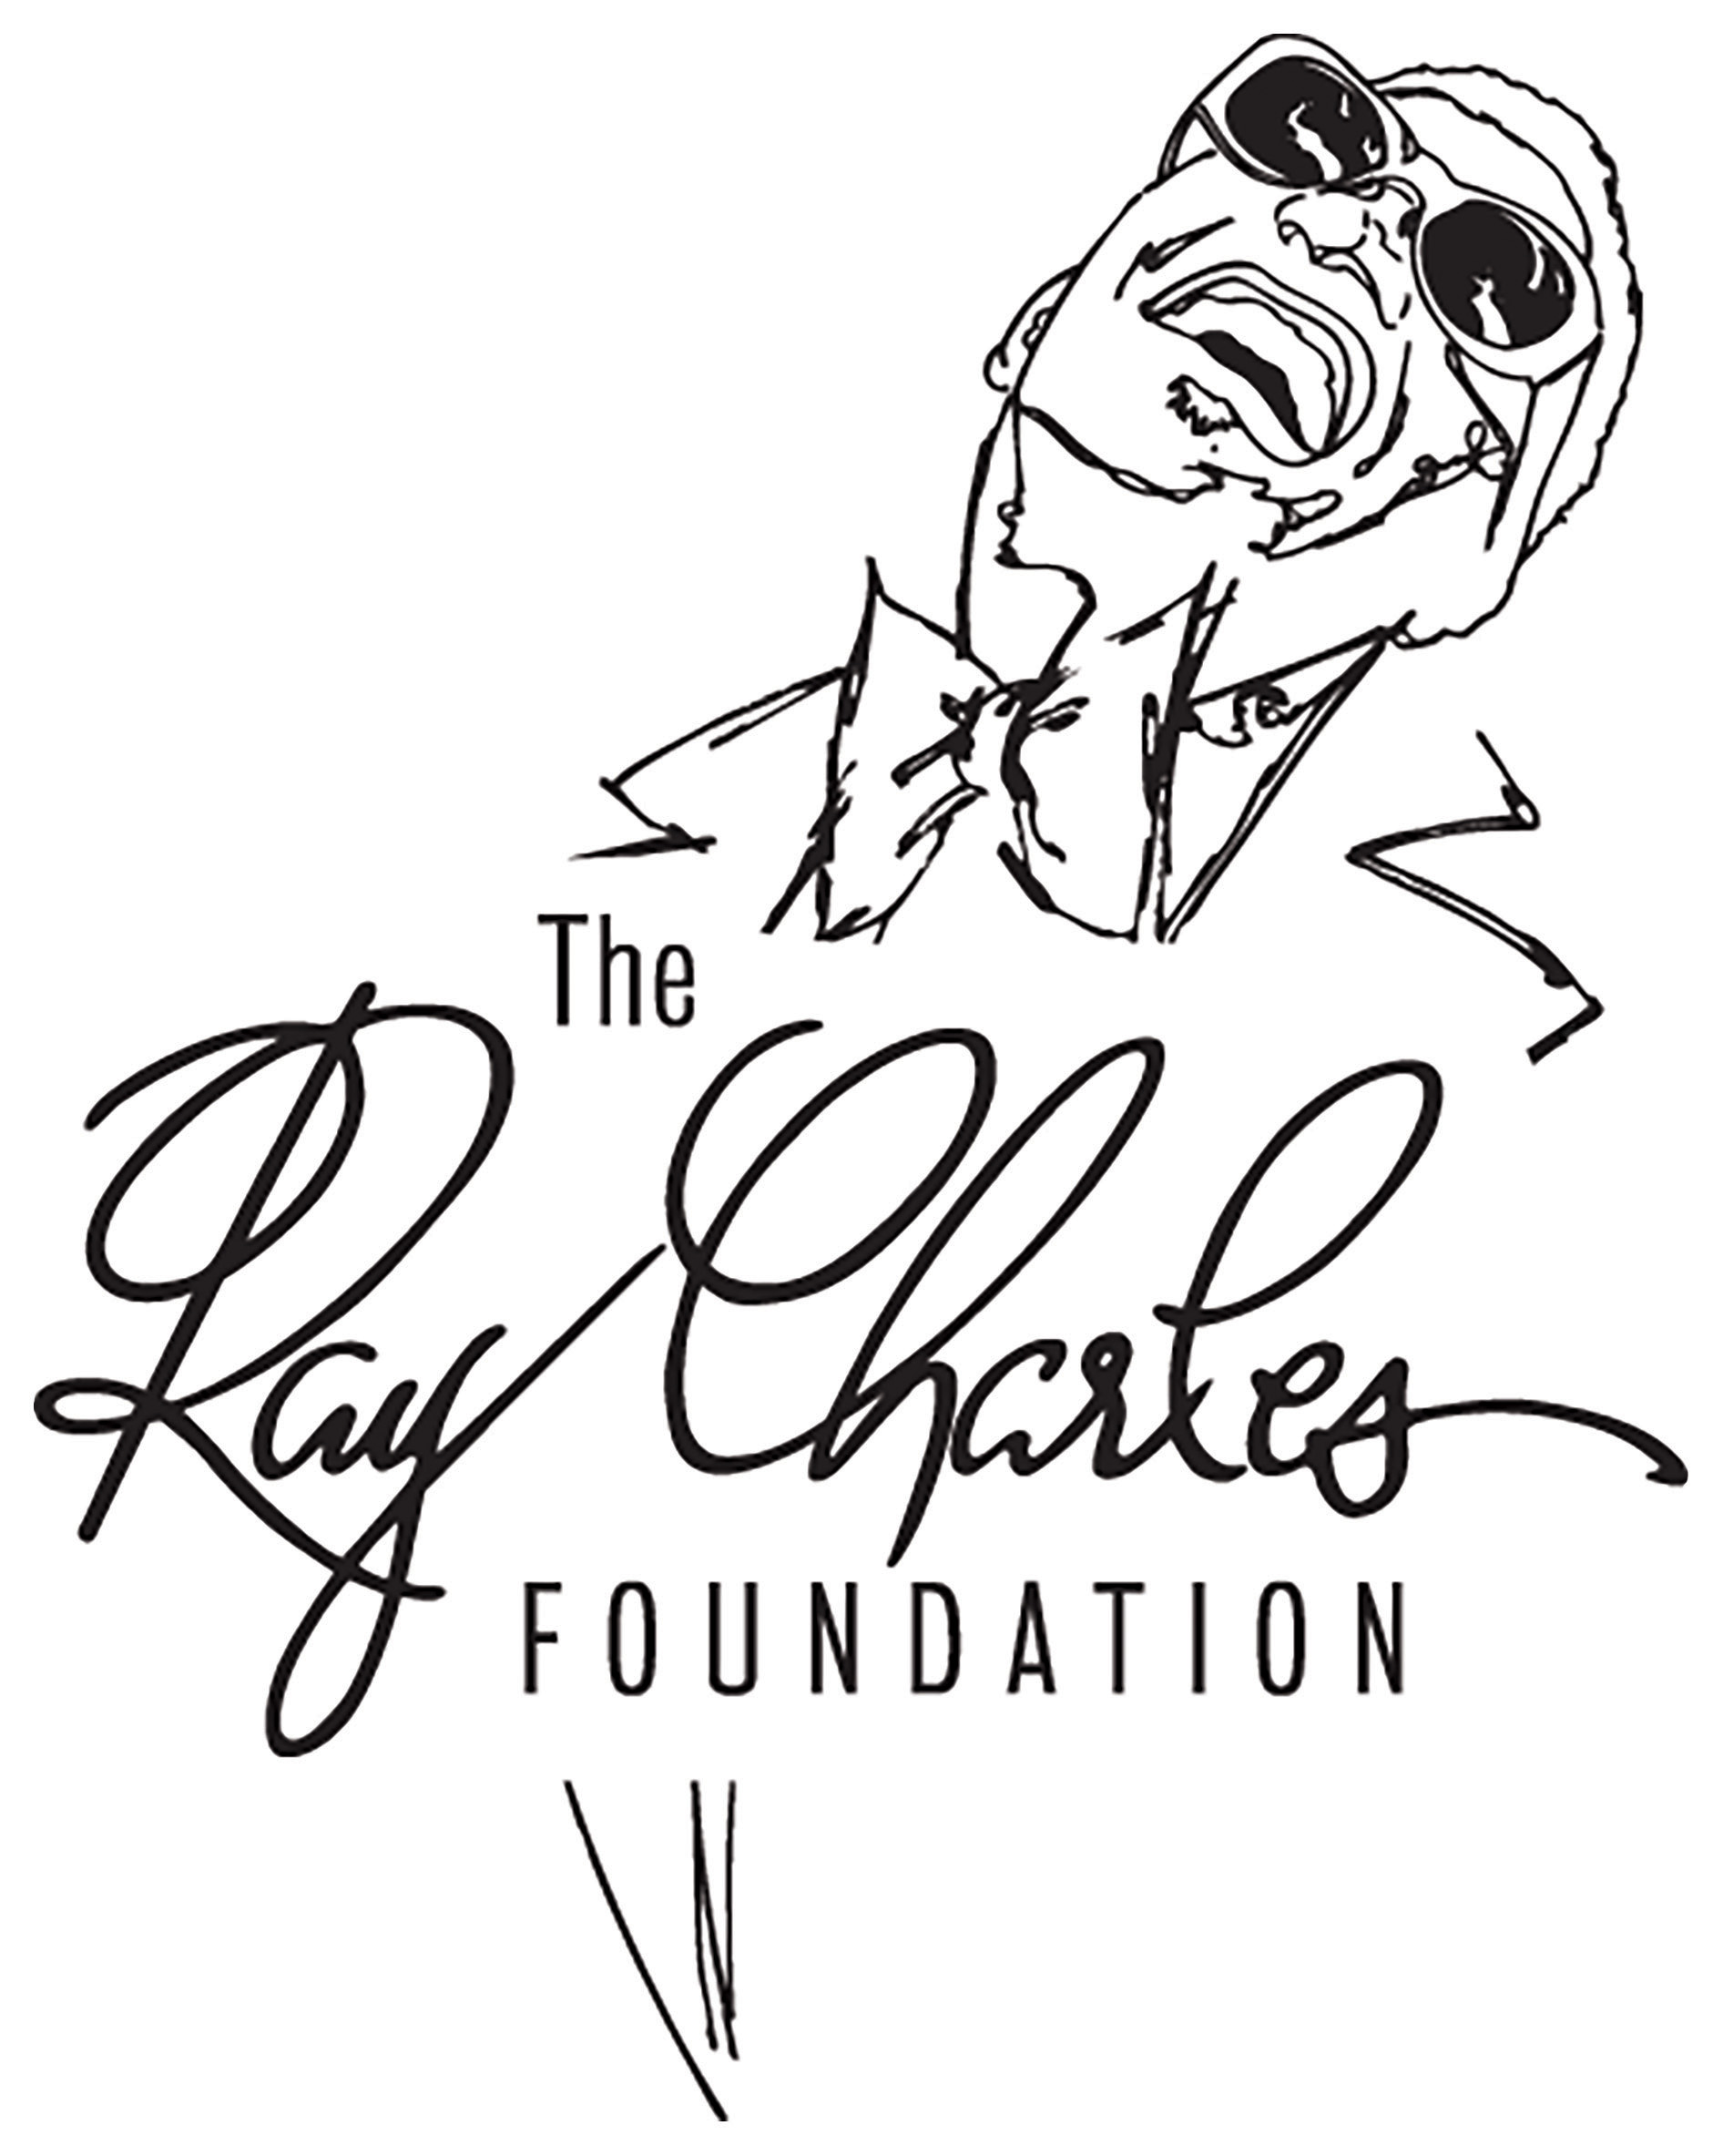 The Ray Charles Foundation Logo